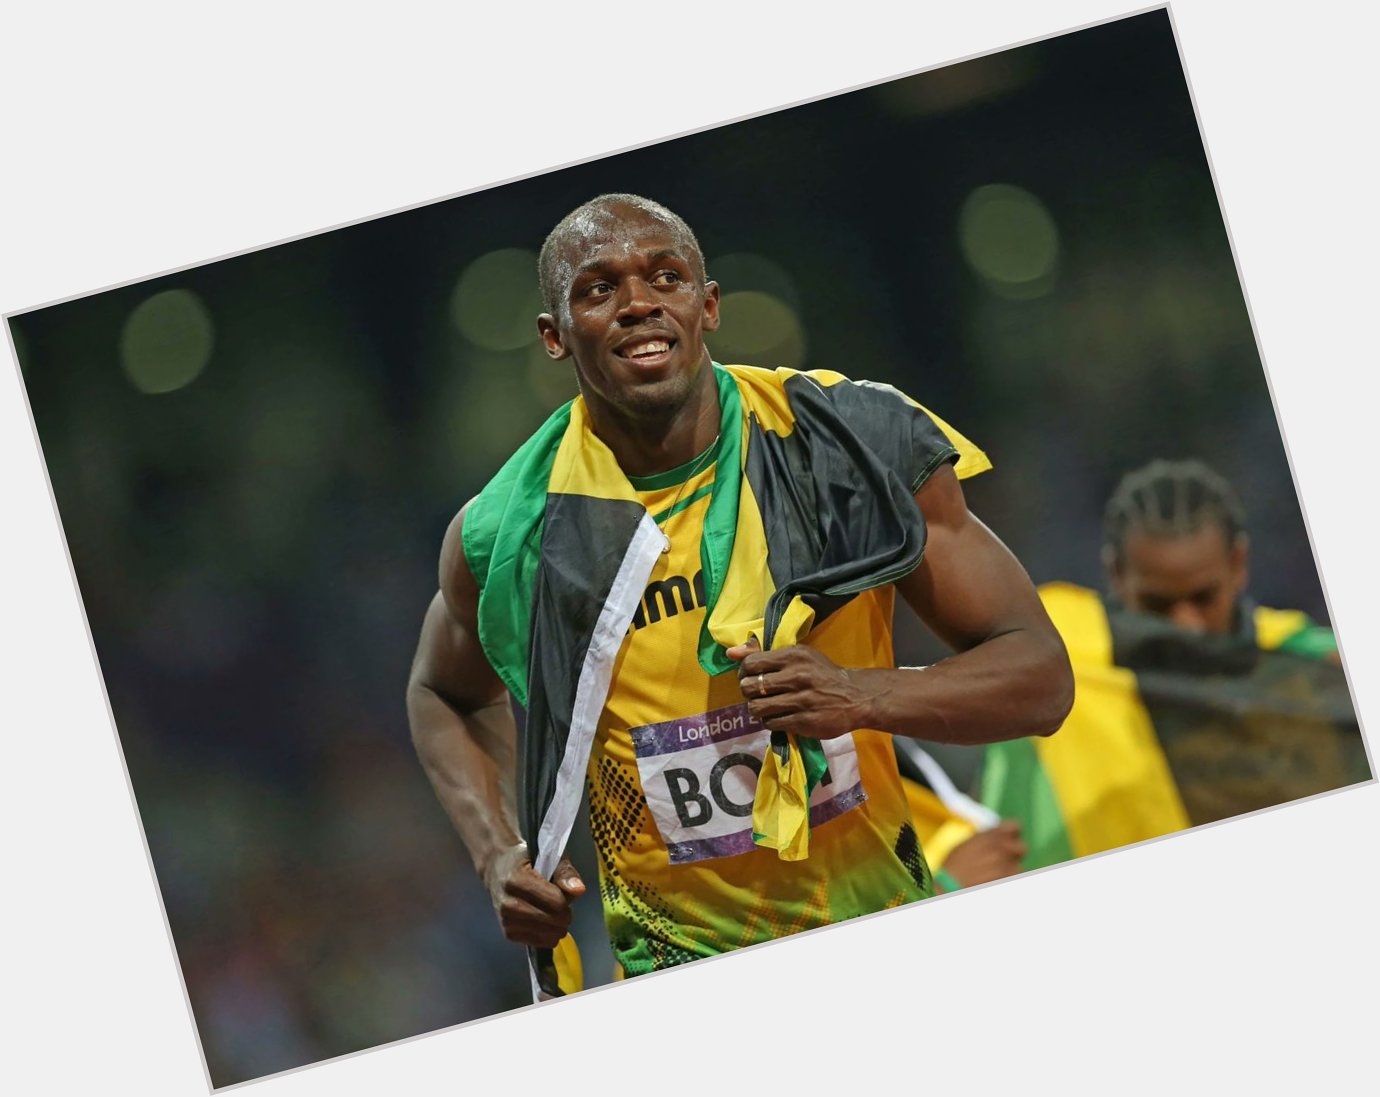 Happy Birthday to Usain Bolt who turns 35 today! 